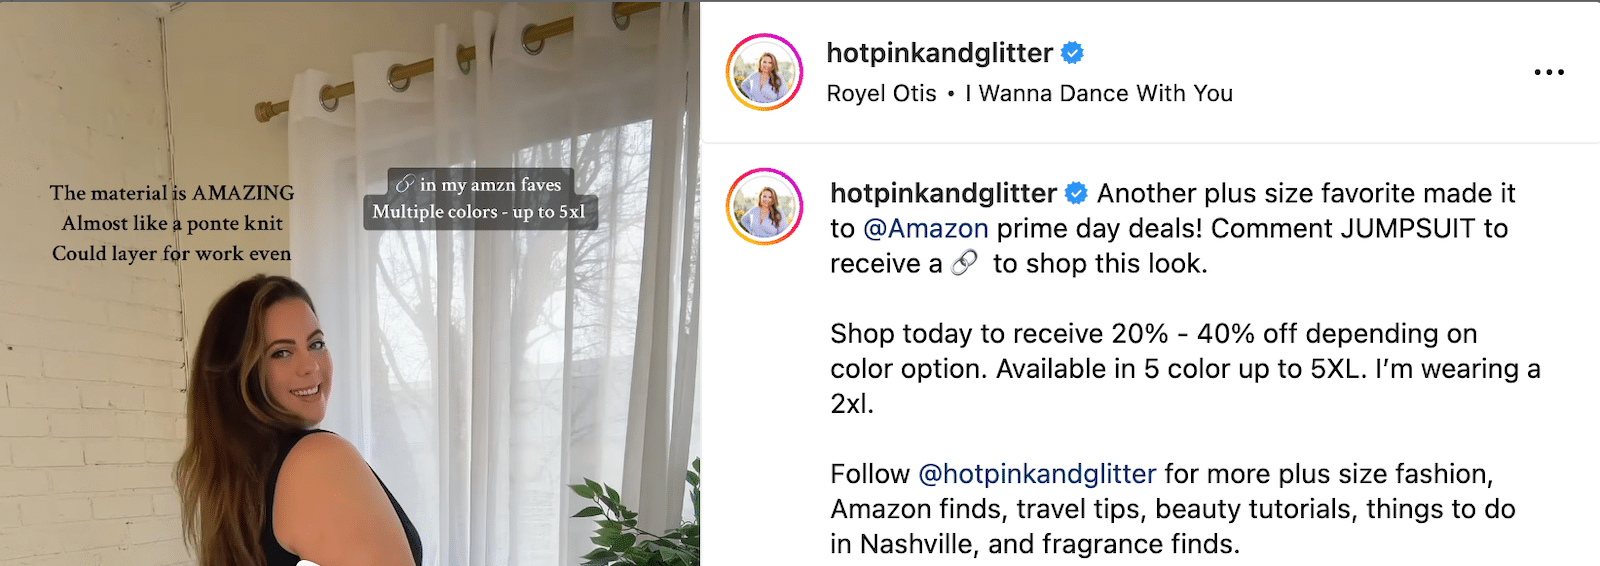 The hotpinkandglitter Instagram account makes use of conversational marketing.